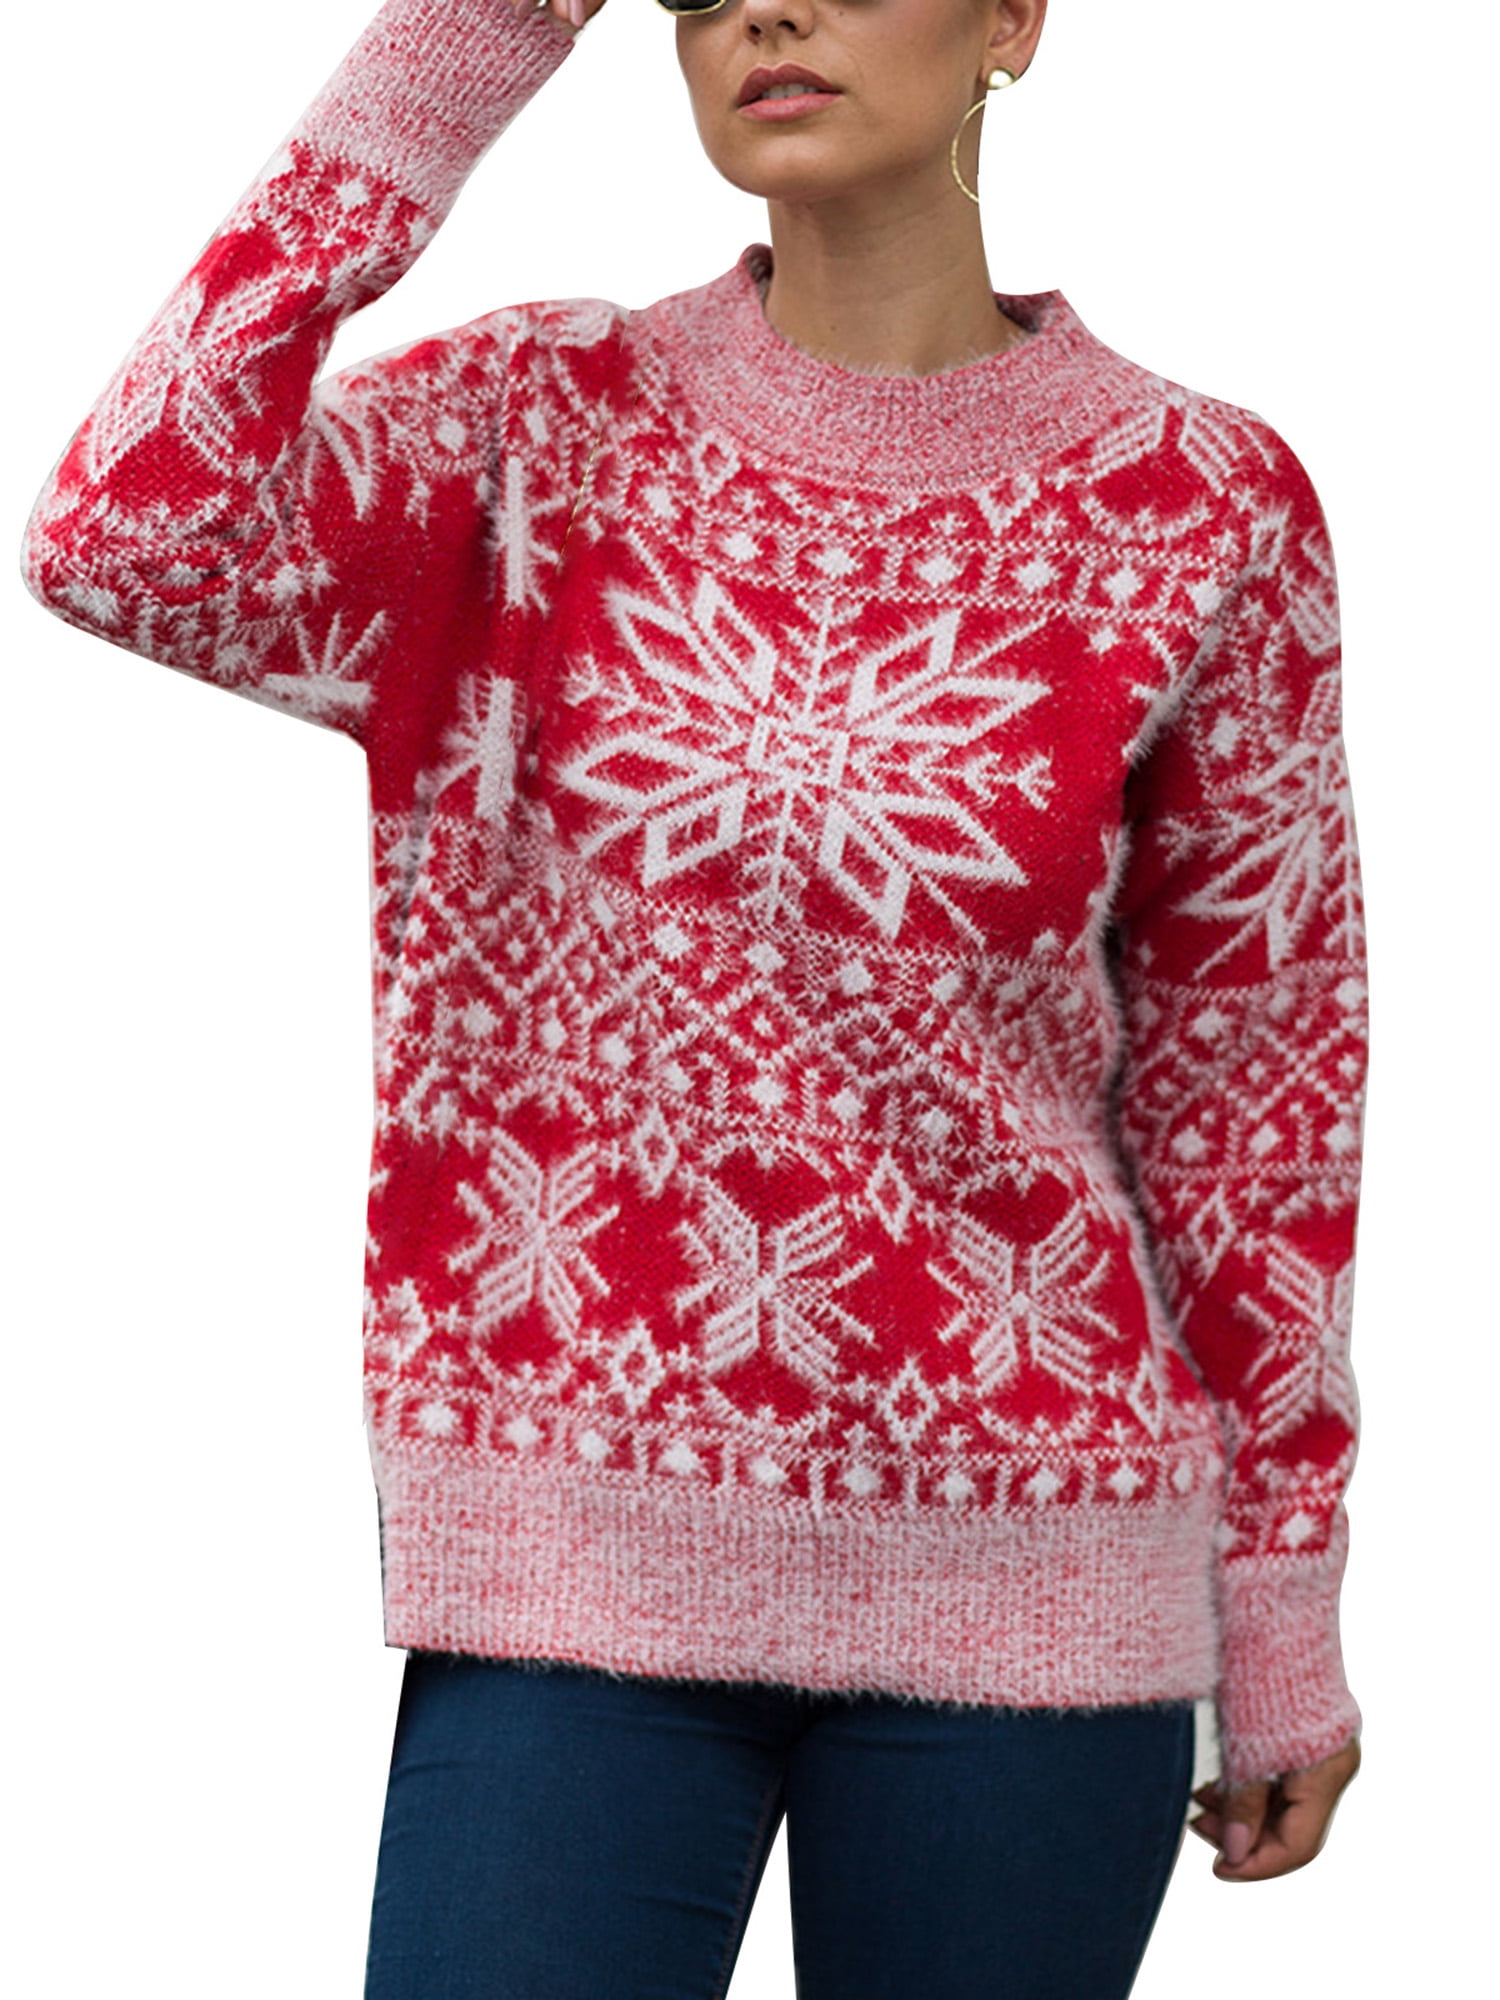 Hoodies for Women Christmas Snowflakes Print Sweatshirts Turtleneck Tops Winter Fall Pullover Long Sleeve Jackets 